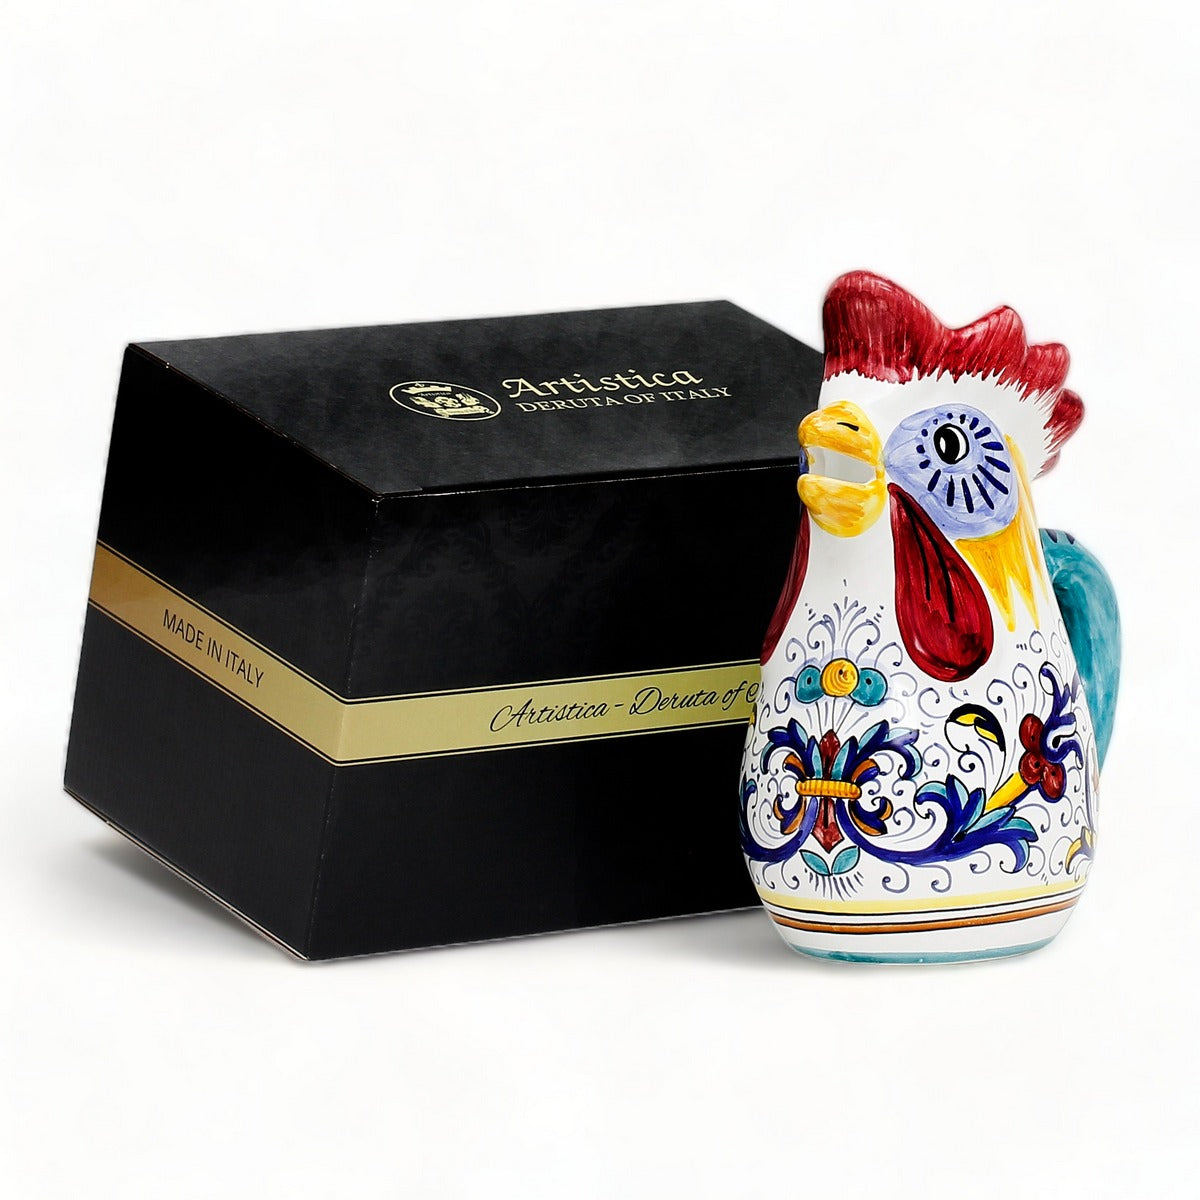 GIFT BOX: With authentic Deruta hand painted ceramic - Deruta Ricco Gallo Pitcher (1 Liter)